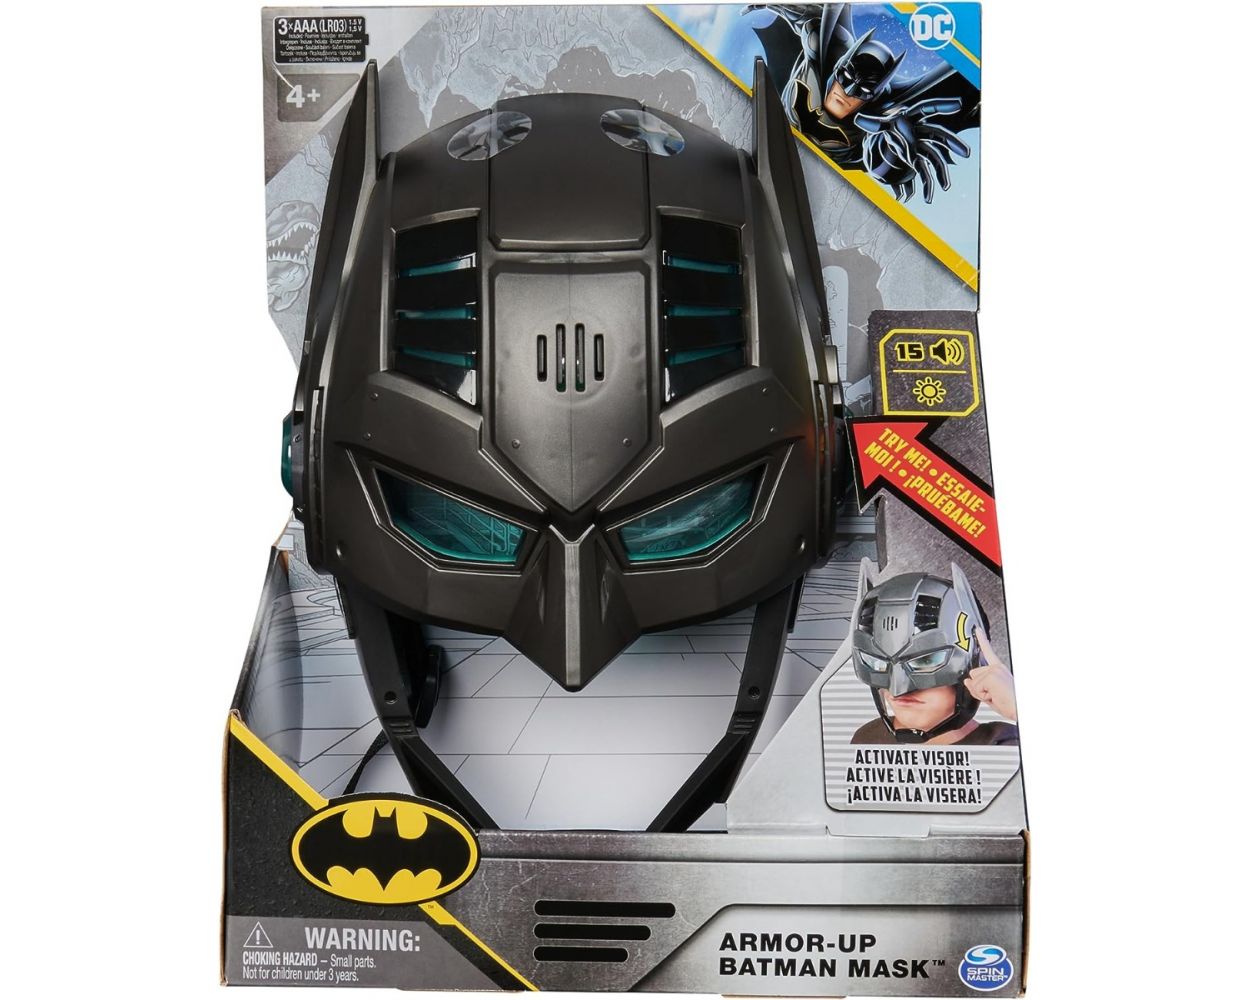 Mascara Batman - Tiendas Jumbo